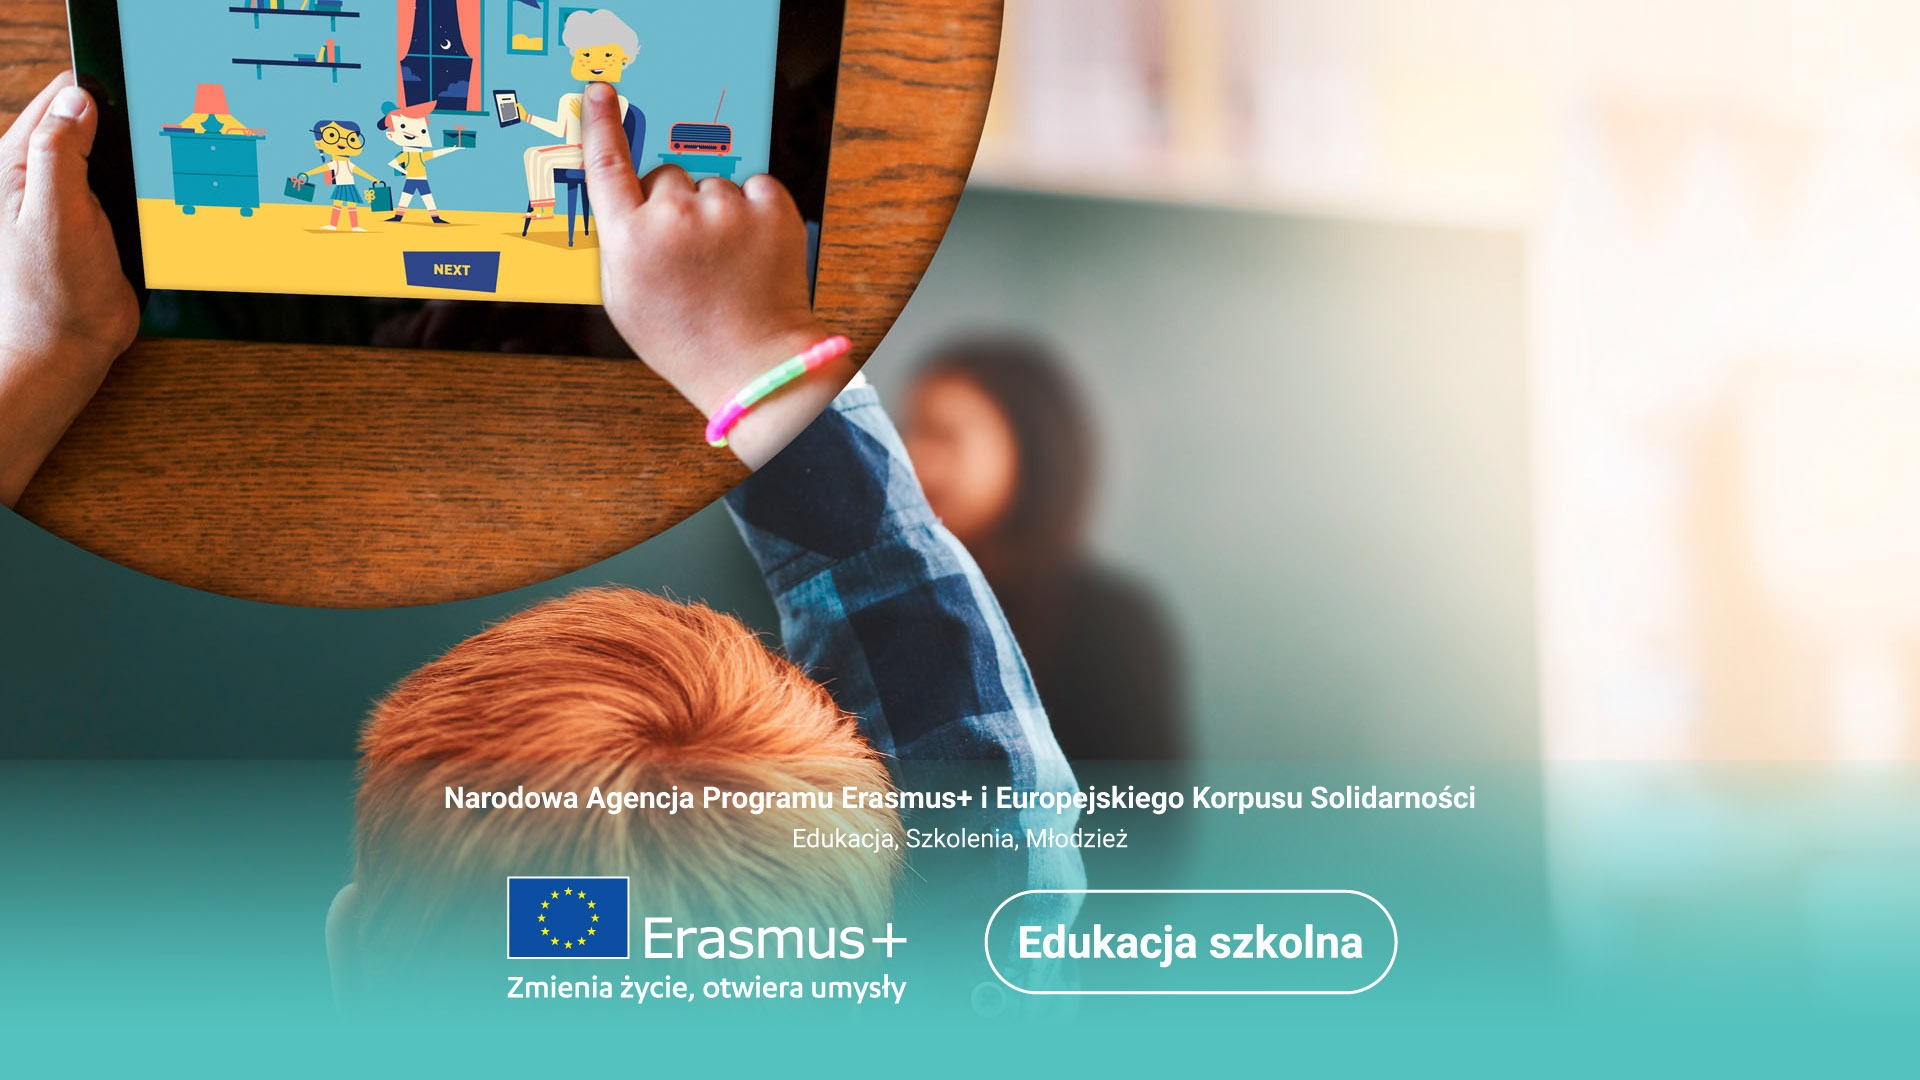 Projekt Erasmus+